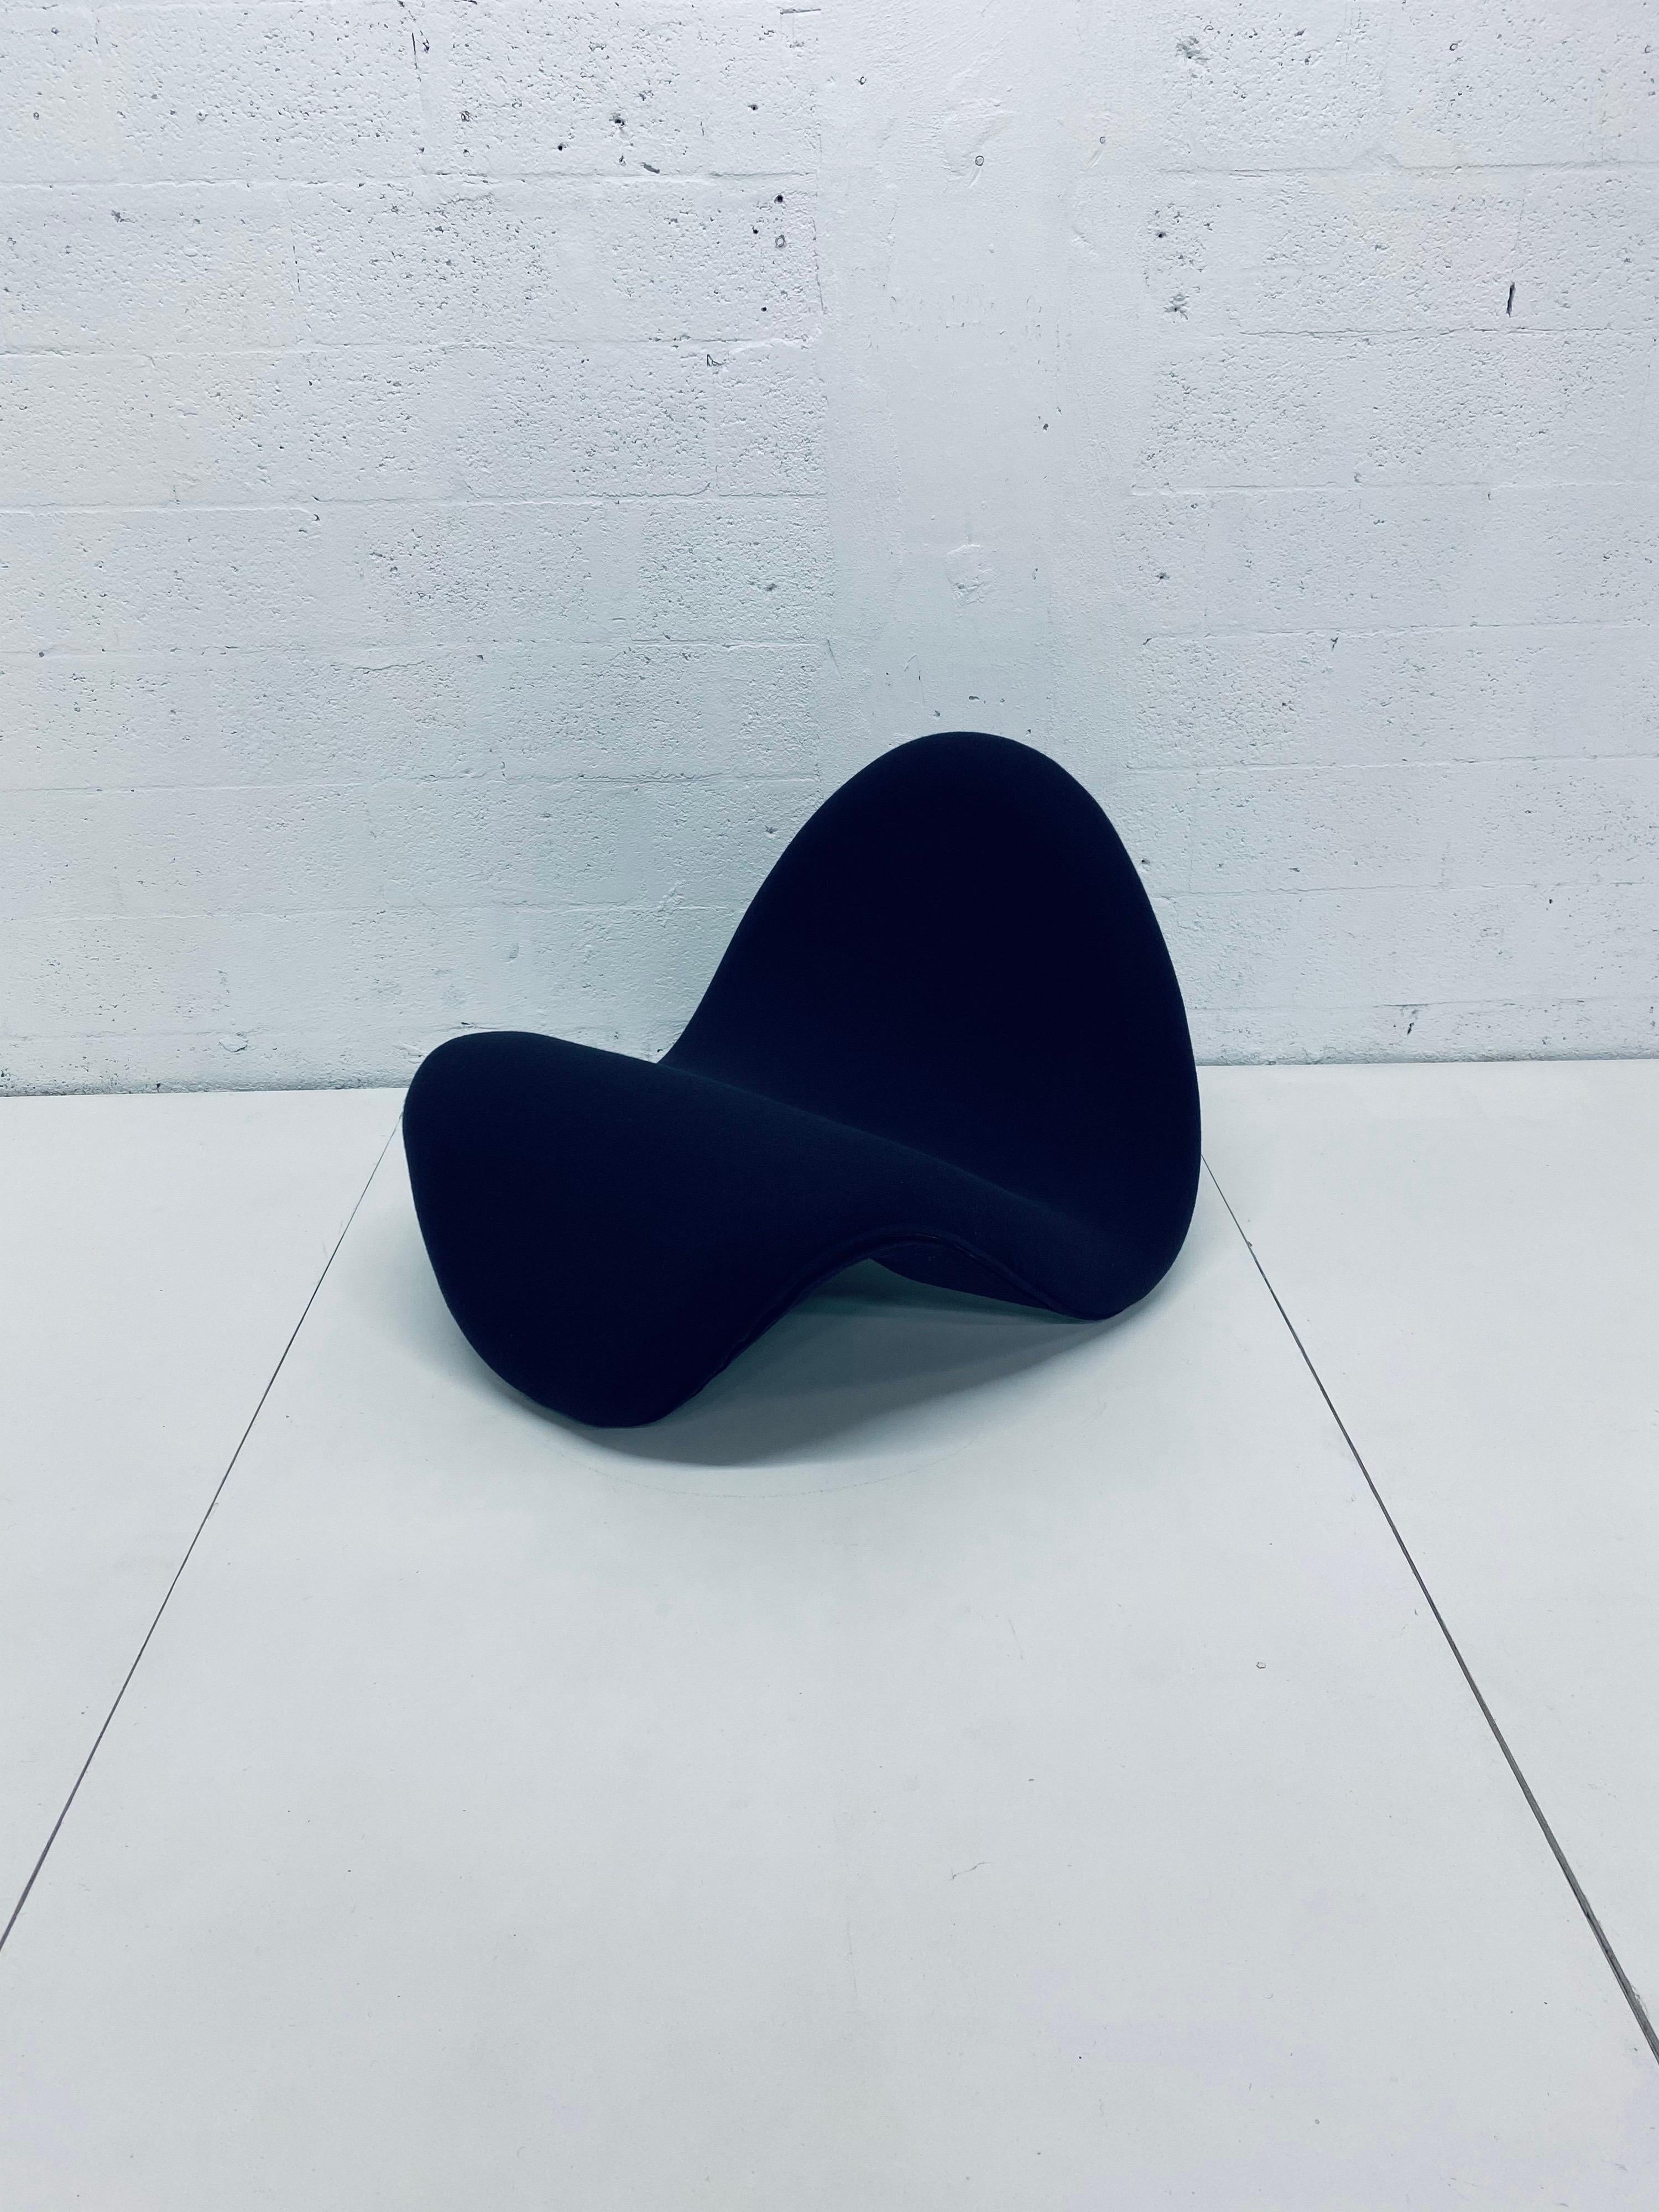 Steel Pierre Paulin Tongue Chair Model F577 in Black Tonus for Artifort